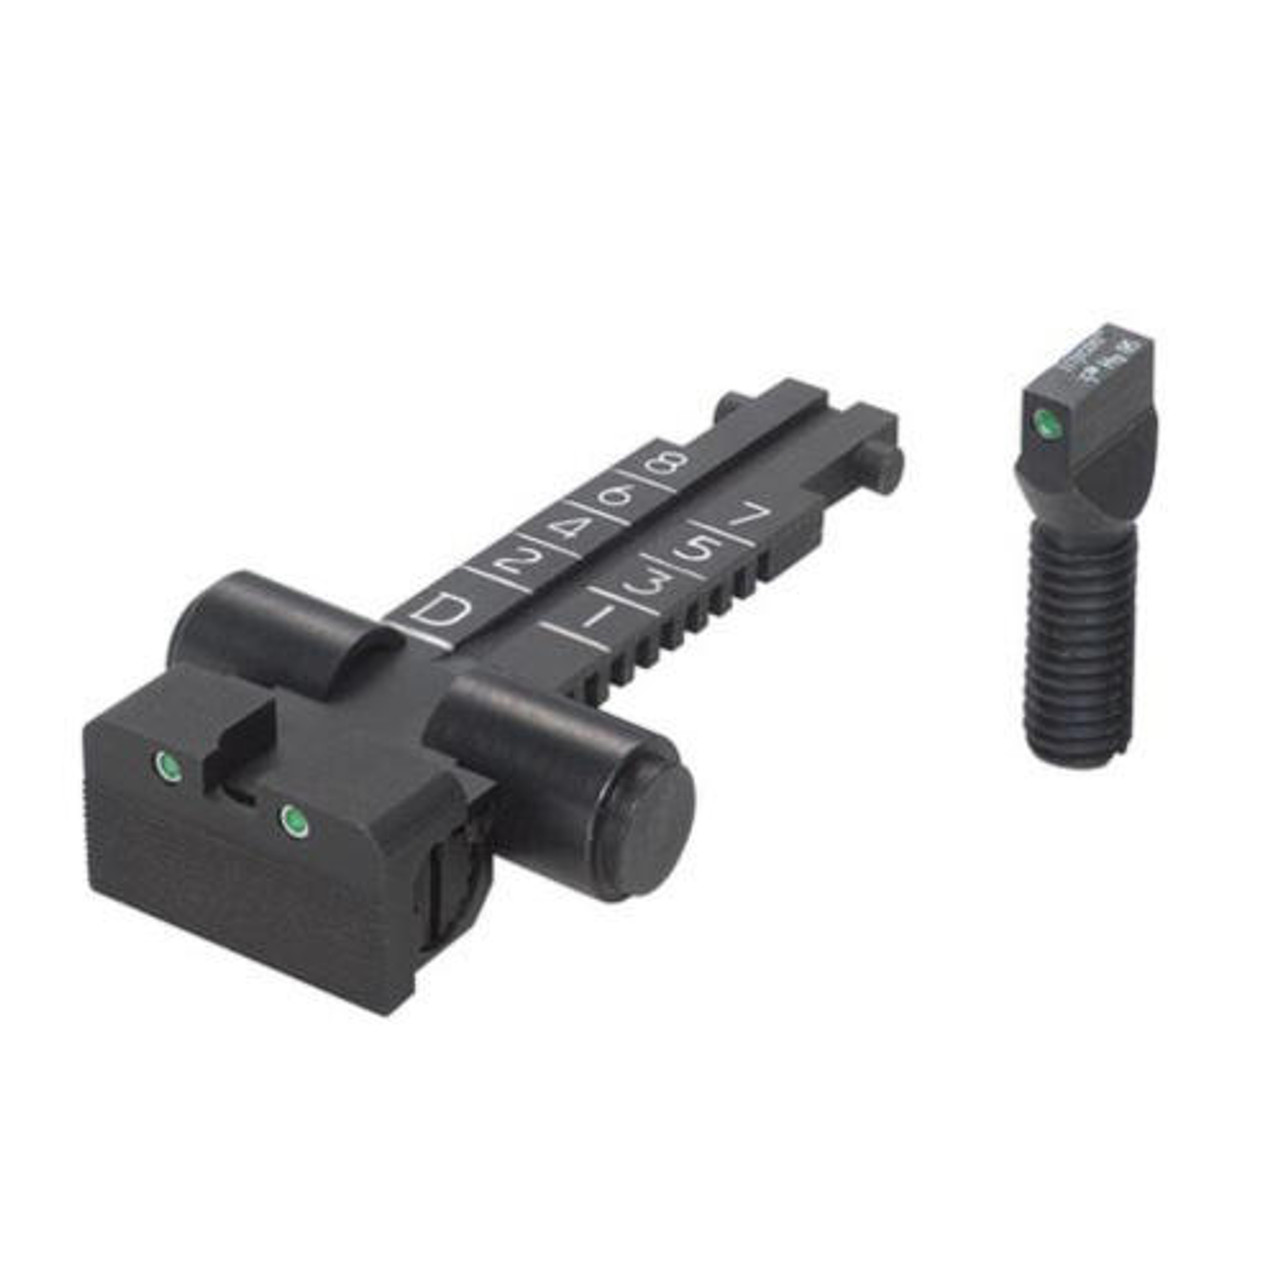 Kensight Kensight AK 47 Sight Set - Adjustable Tangent Tritium Night Sights 100m-800m